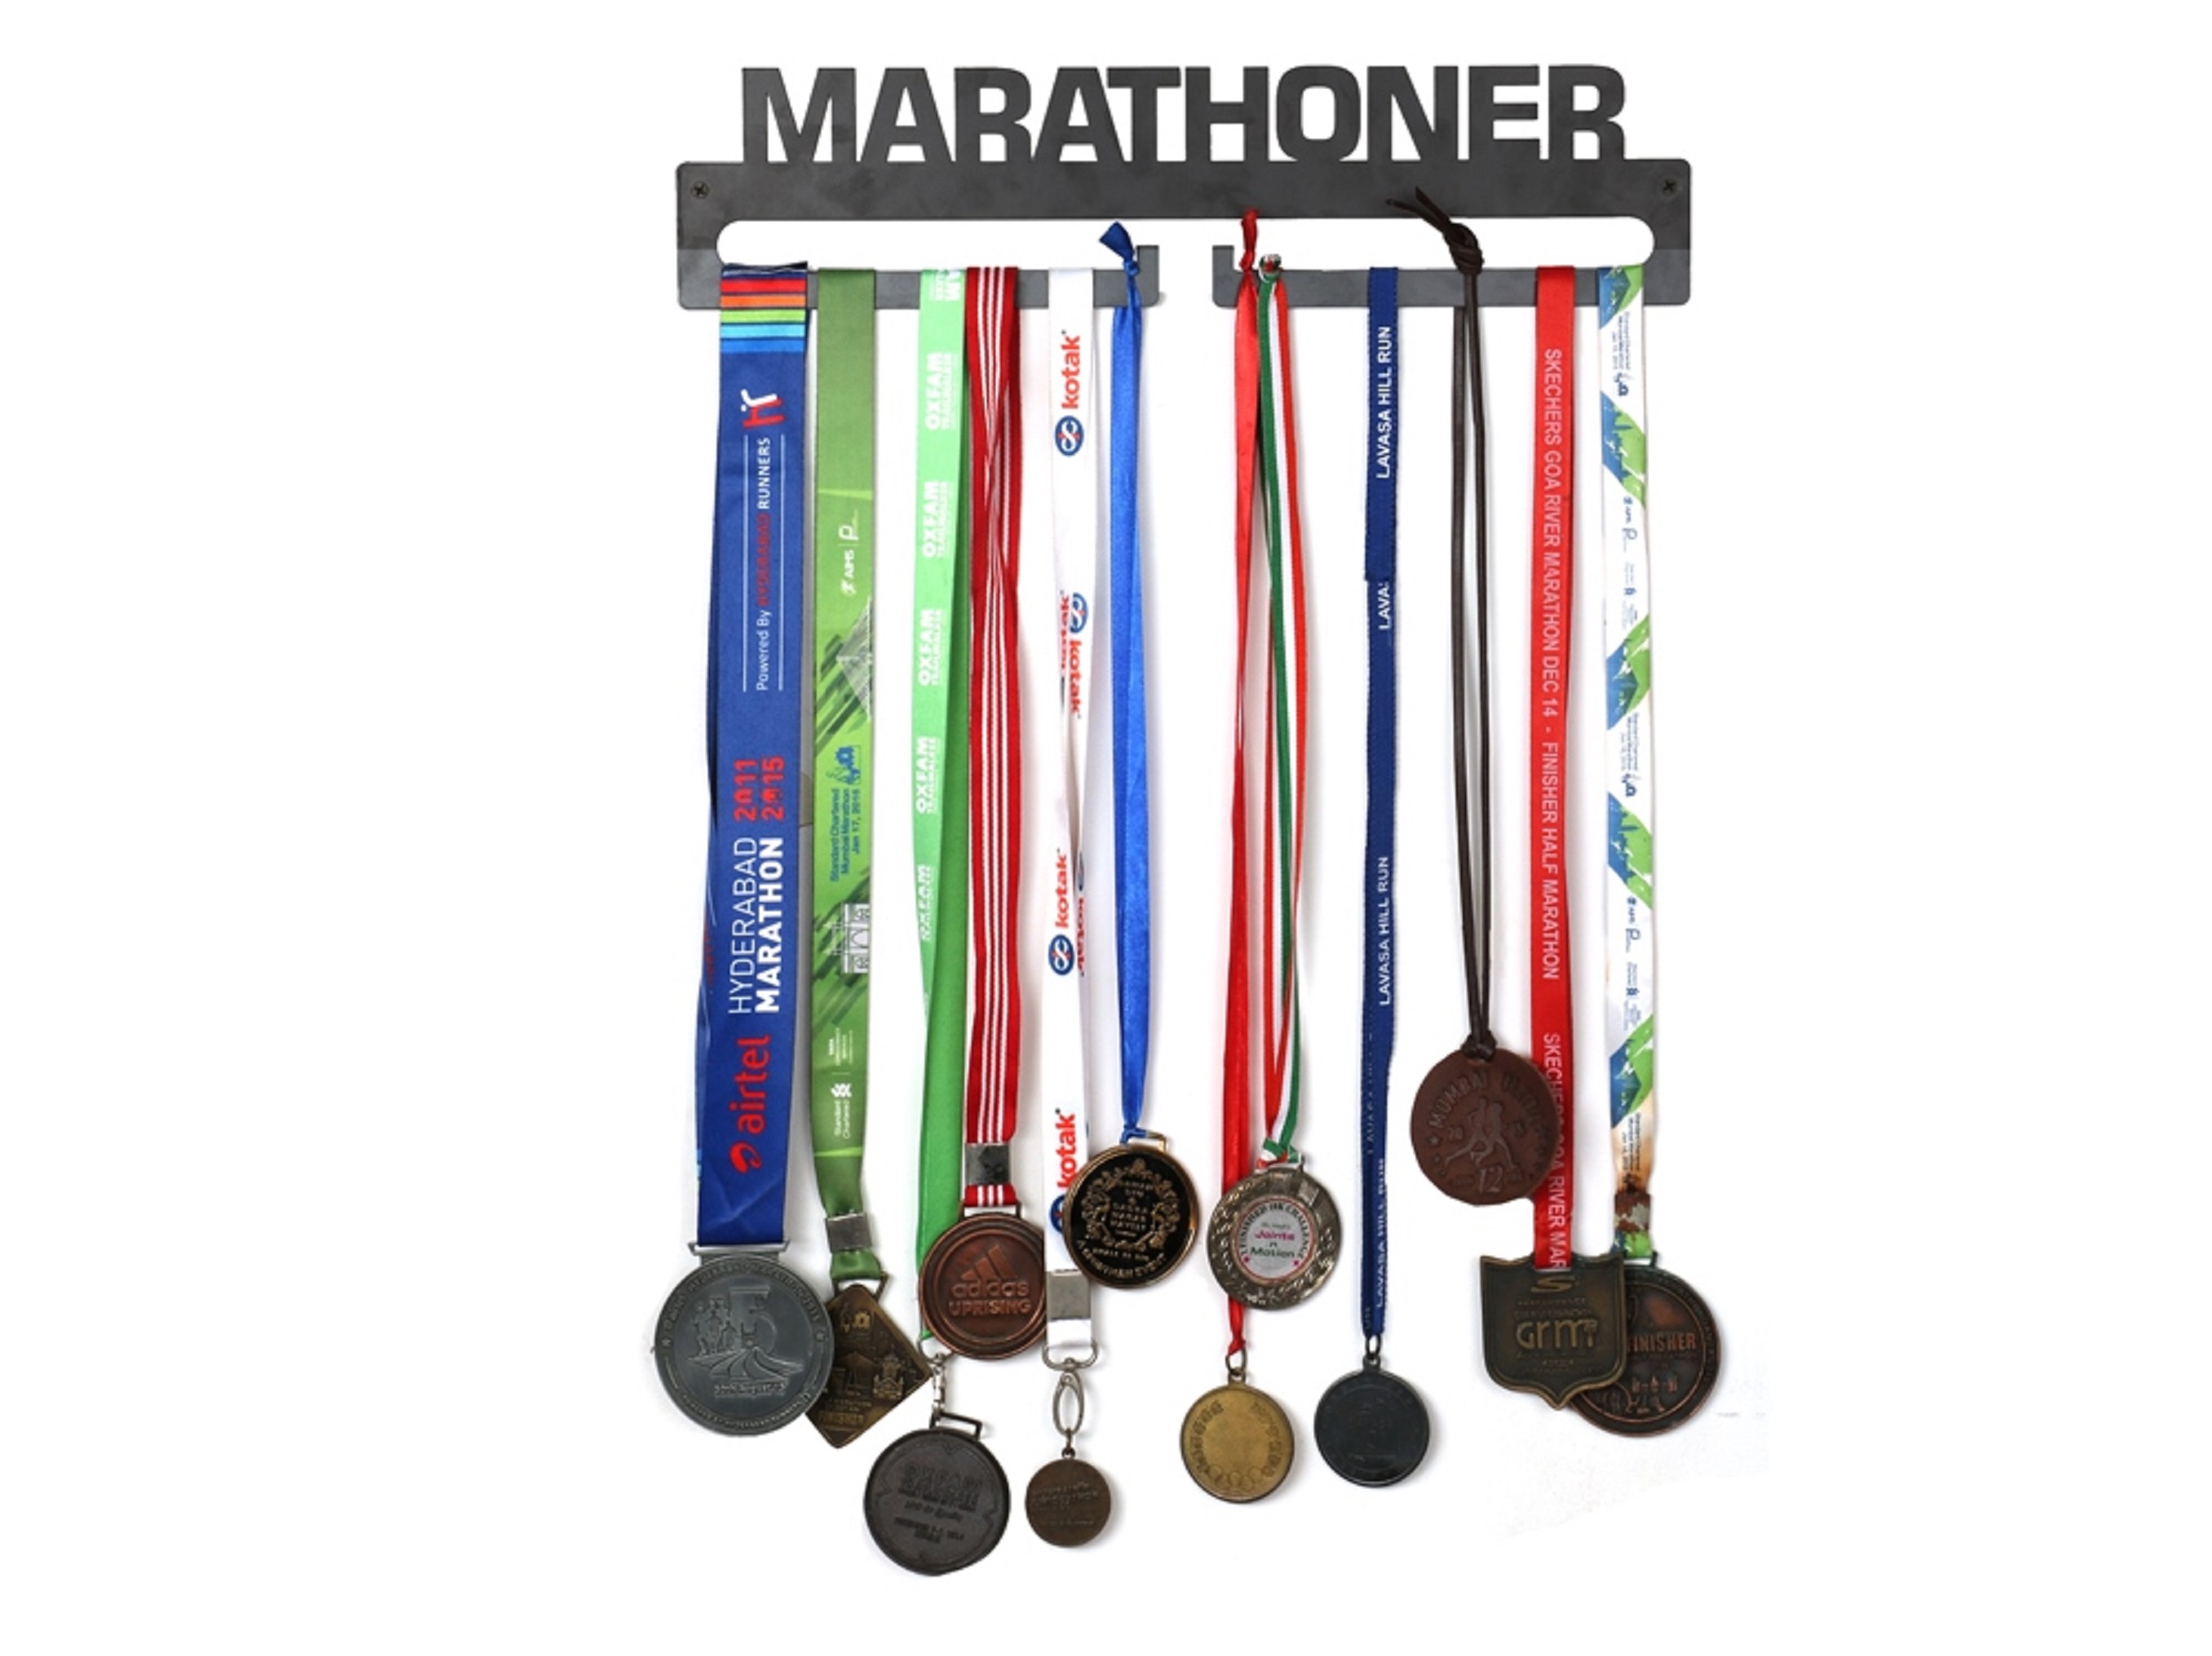 FITIZEN Marathoner 18